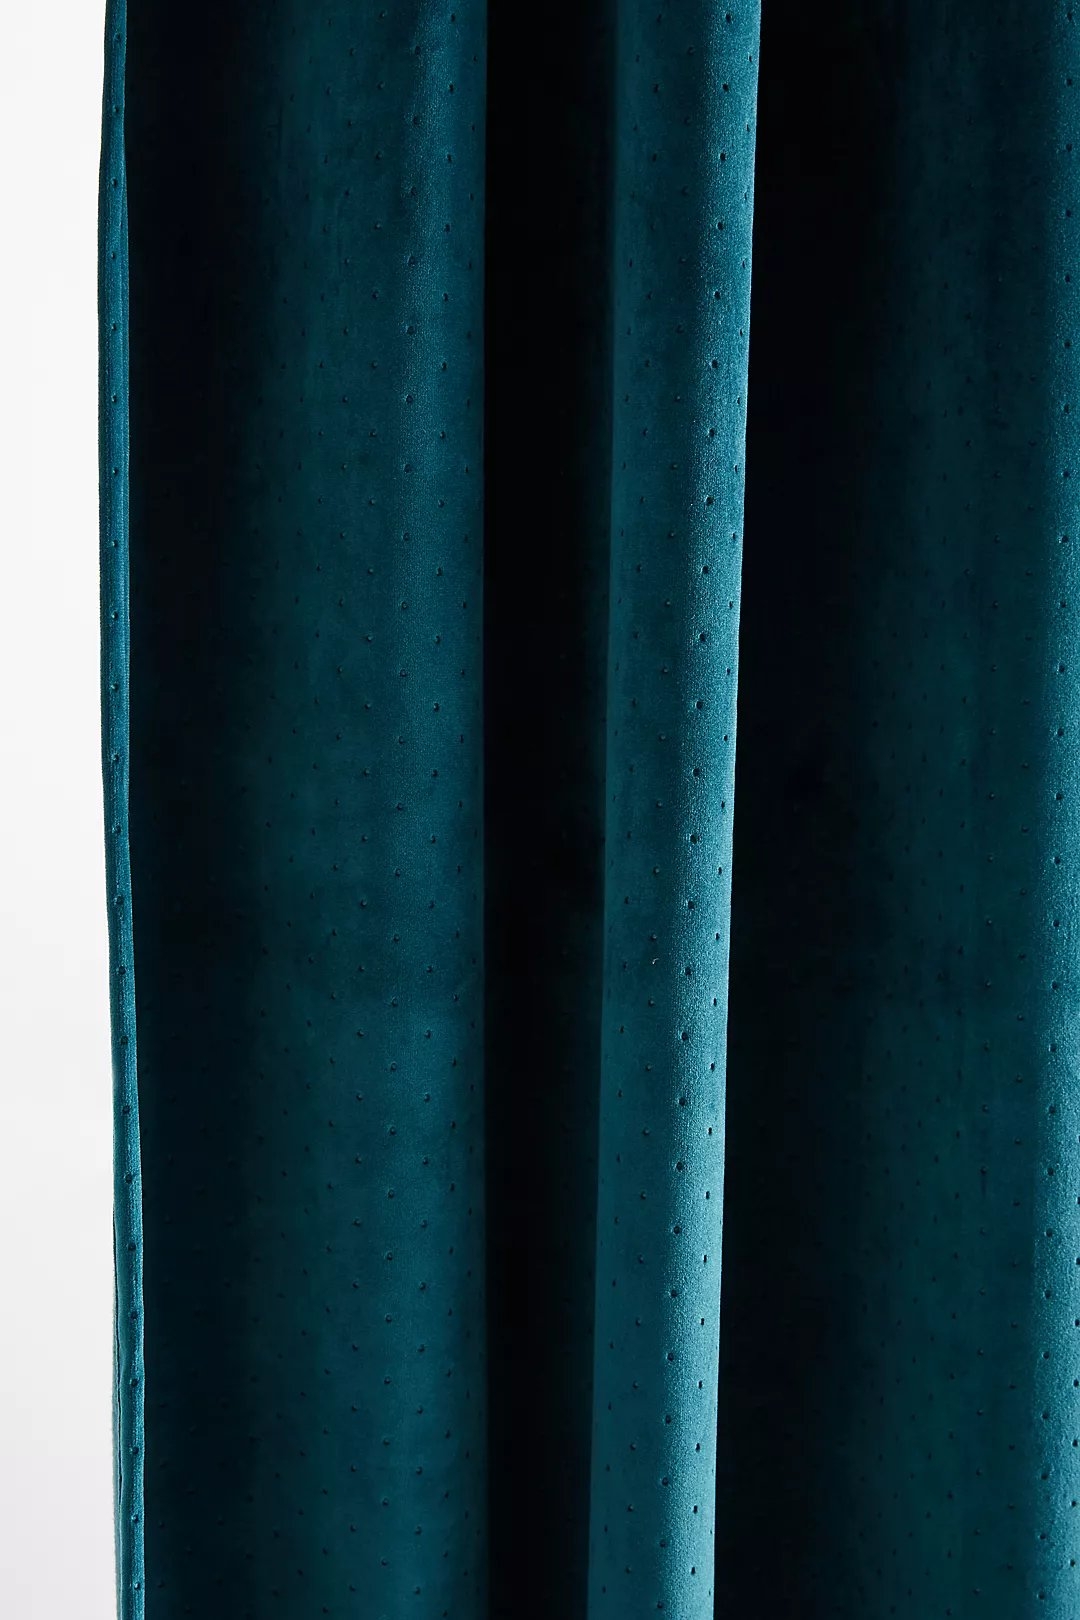 Velvet Louise Curtain, Teal, 50" x 84" - Image 1